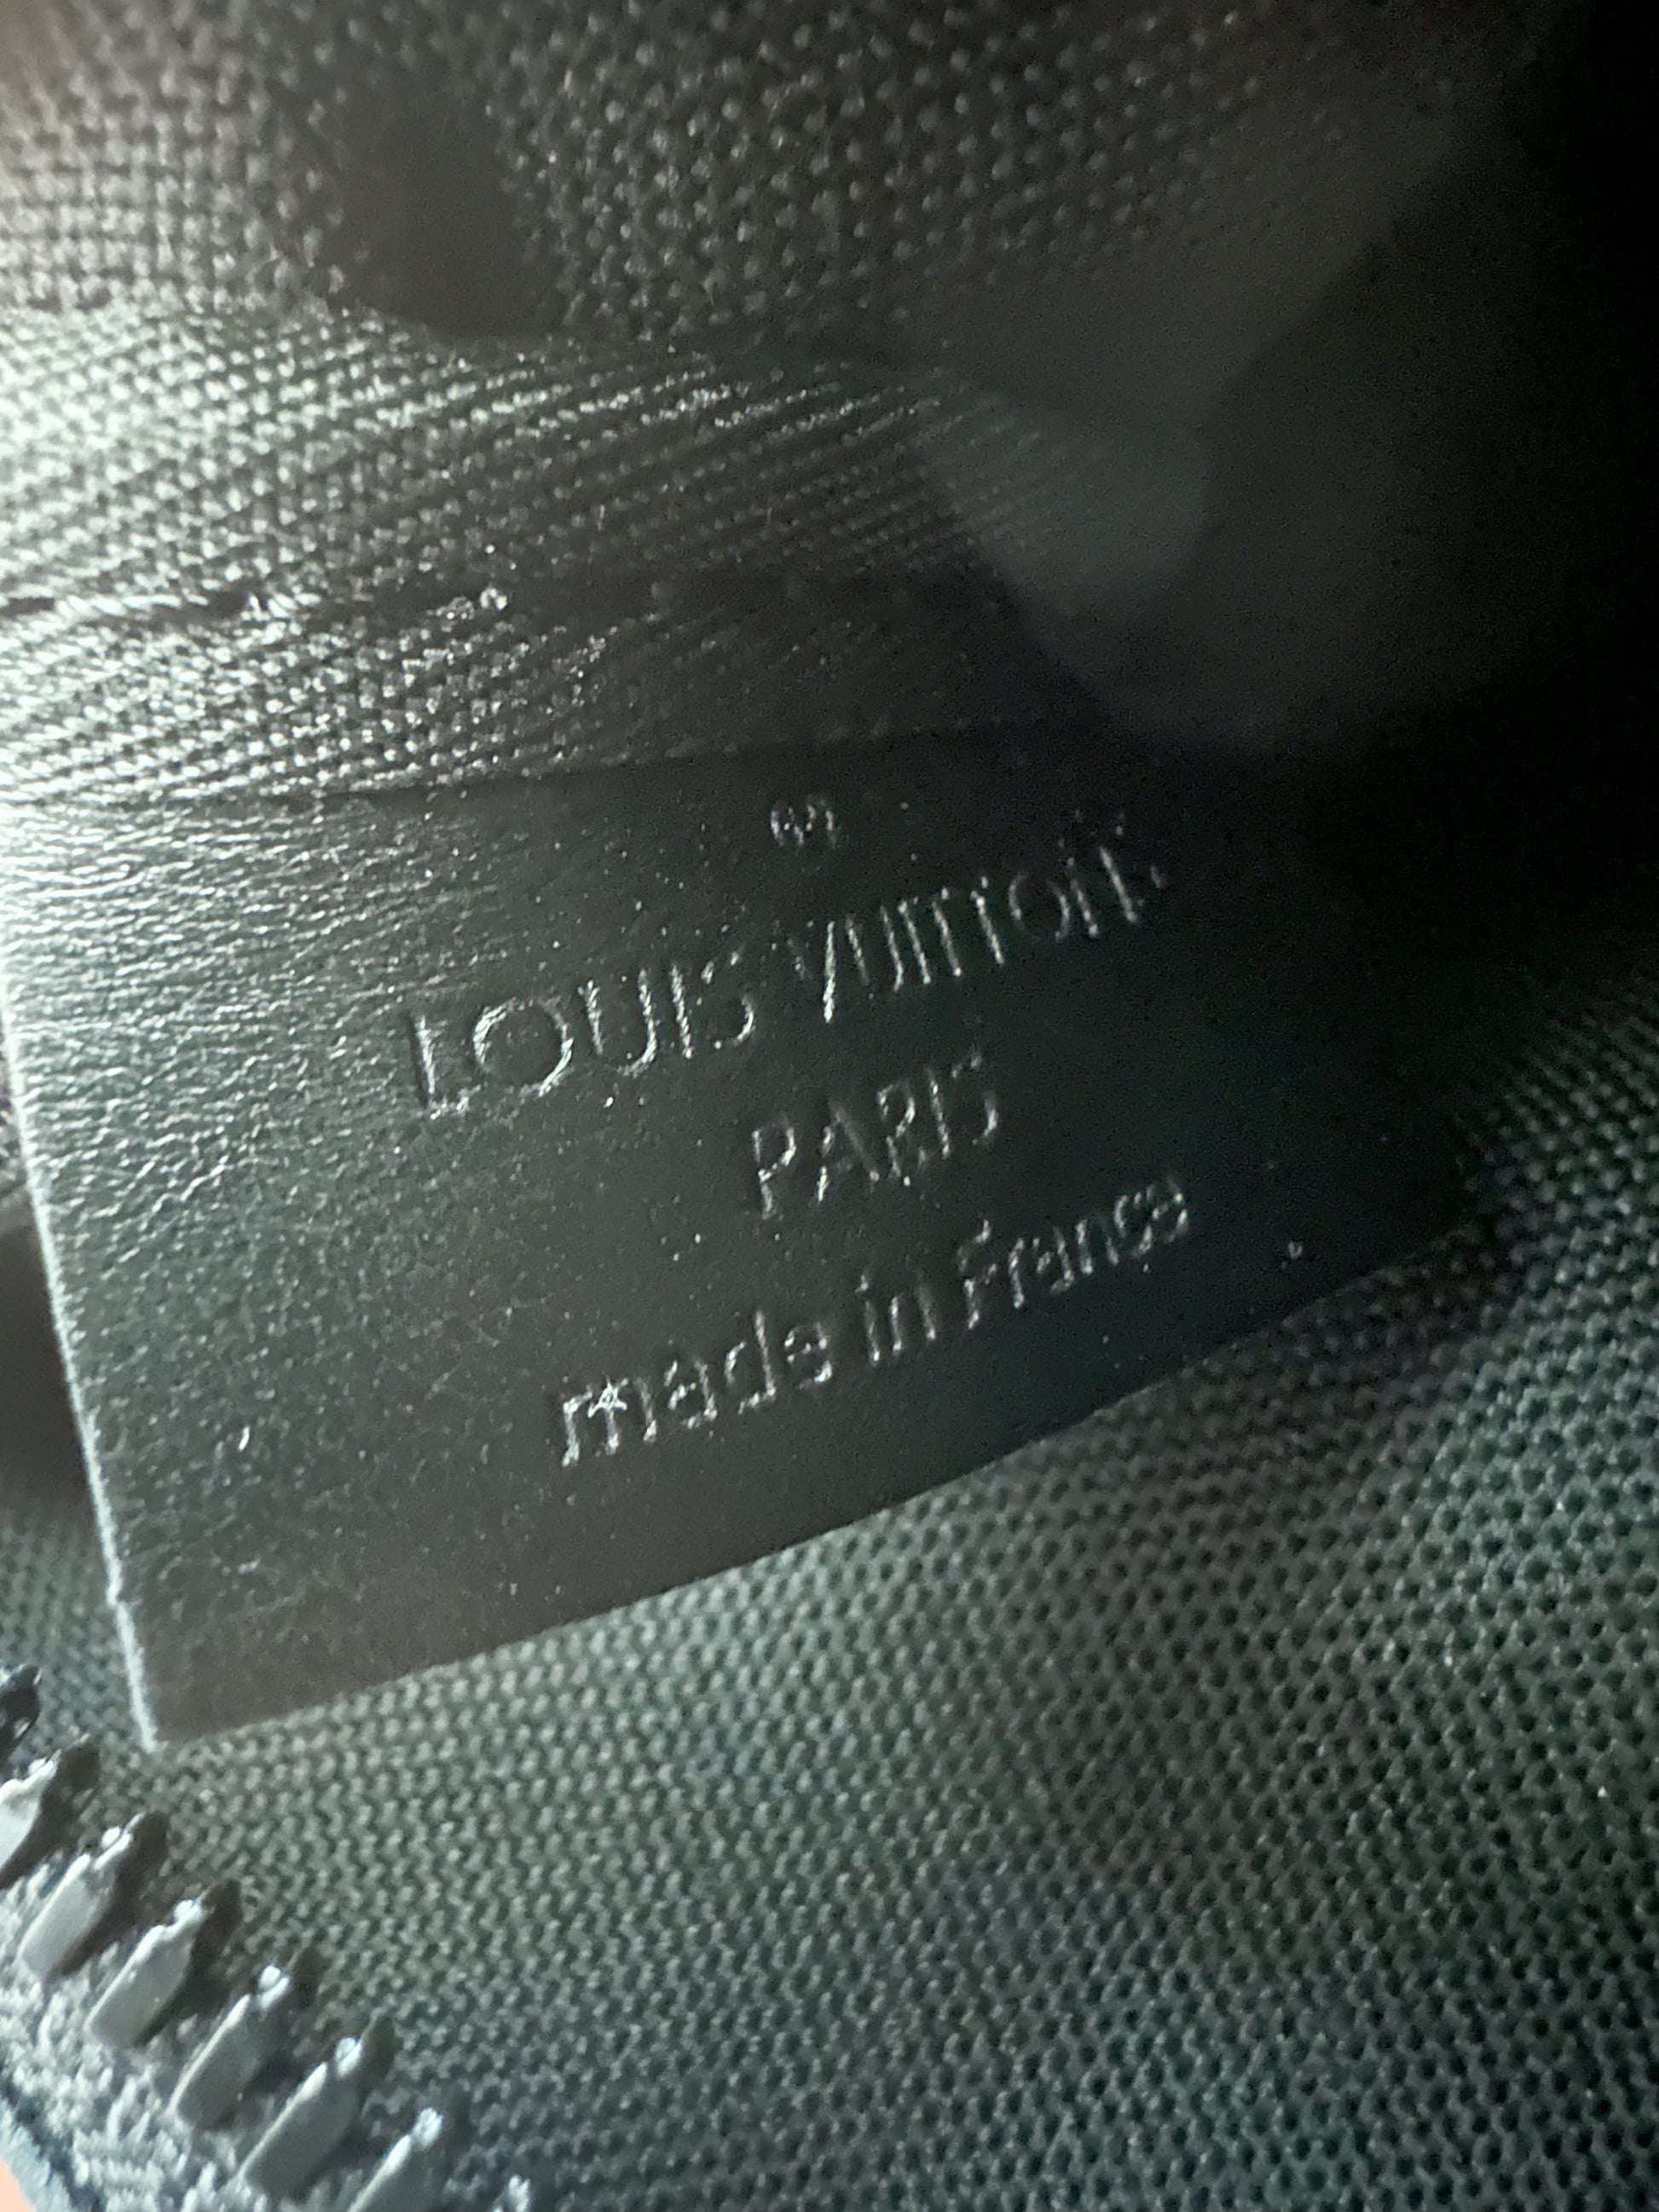 Louis Vuitton label black and gray shoulder bag, includes